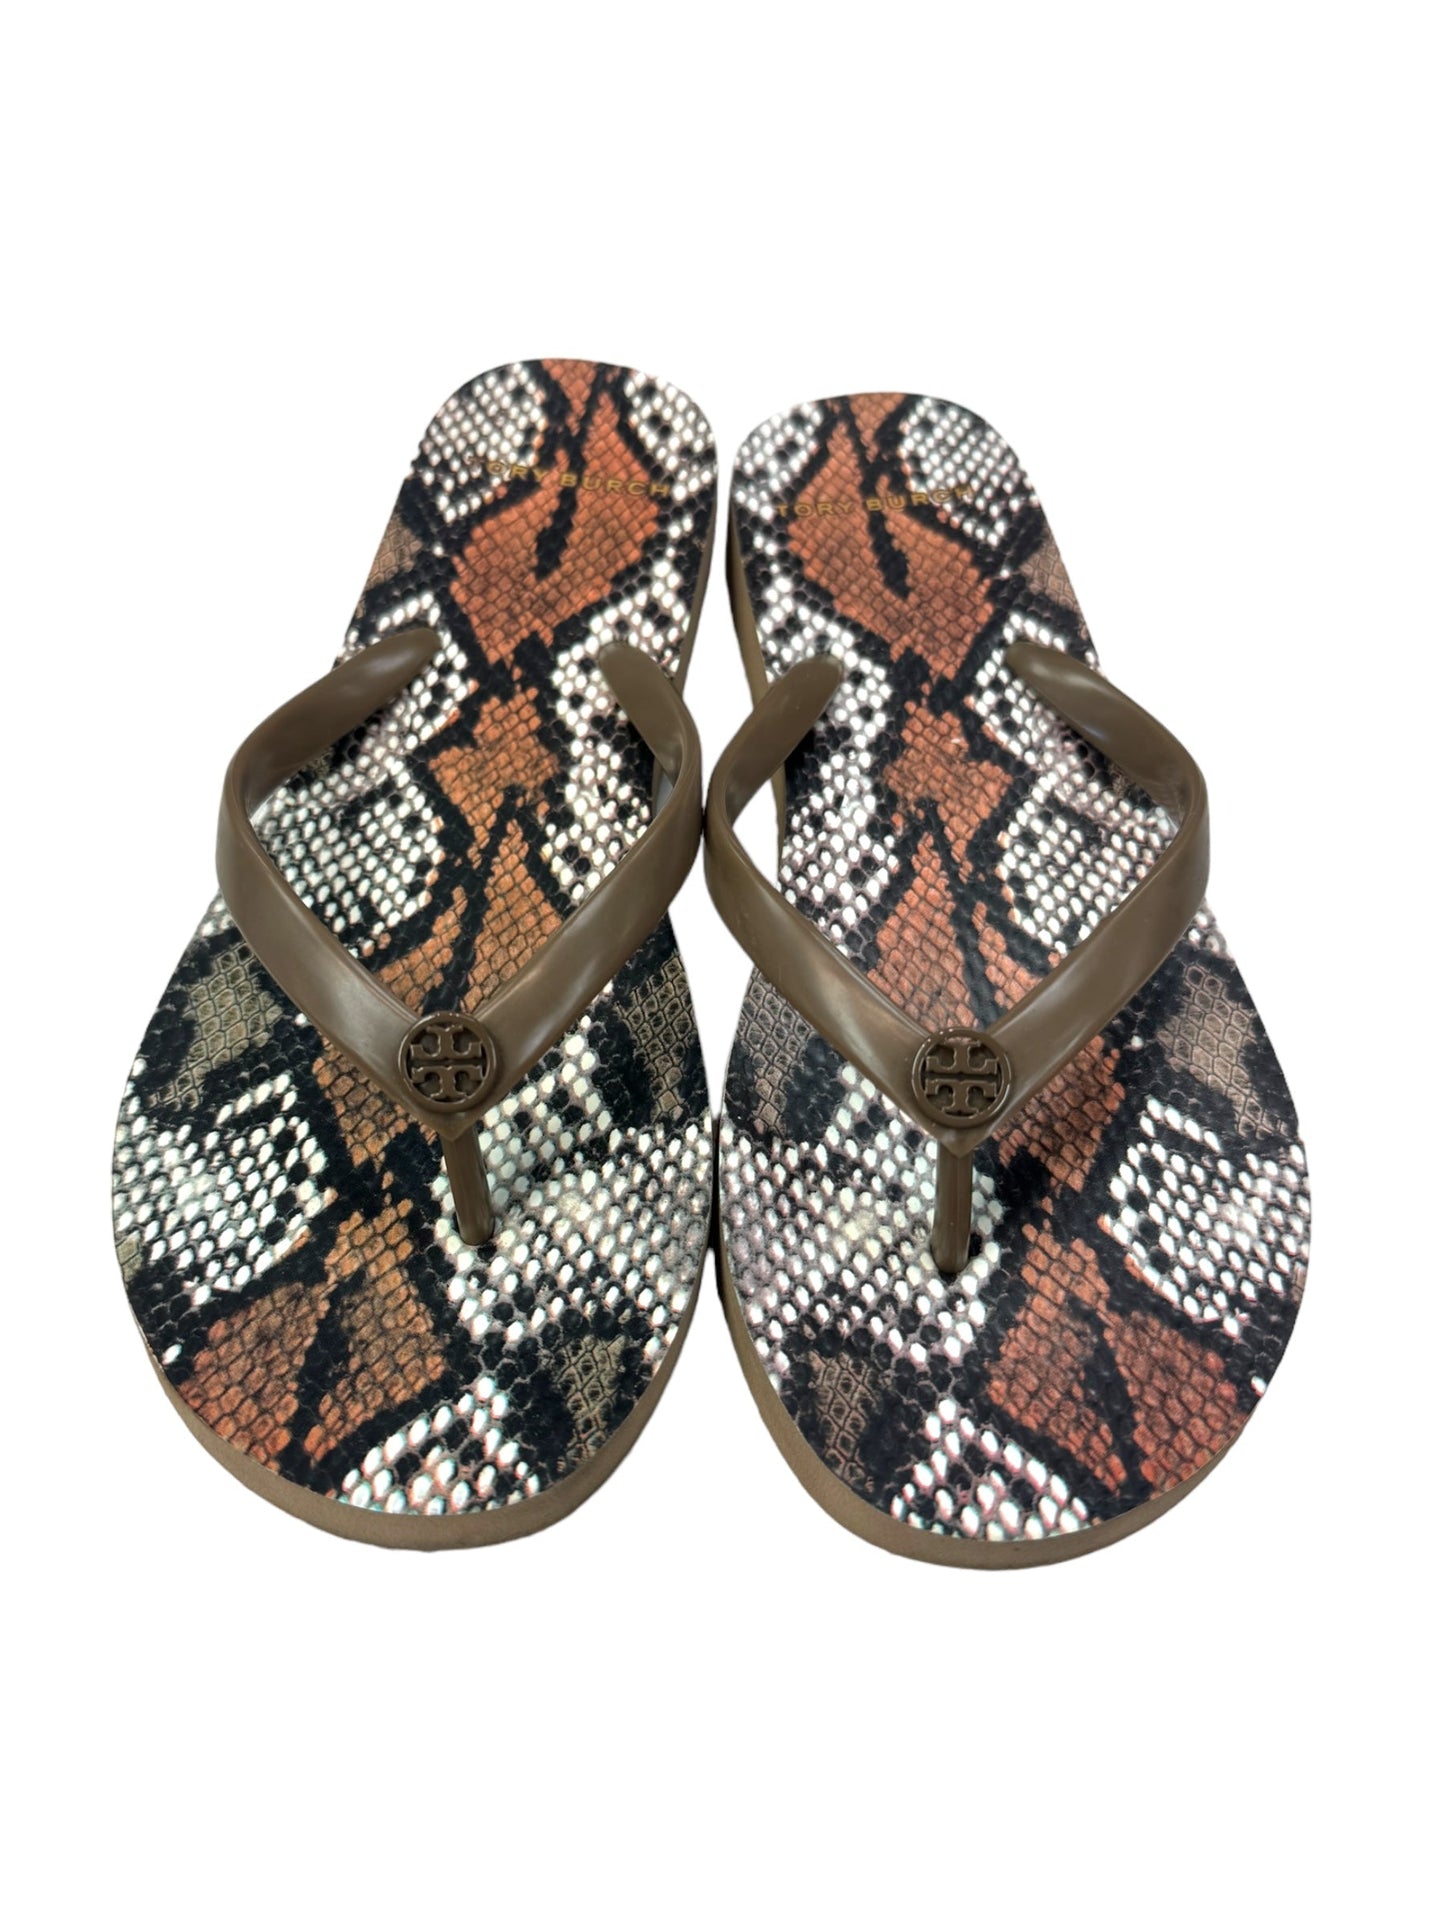 Snakeskin Print Sandals Designer Tory Burch, Size 8